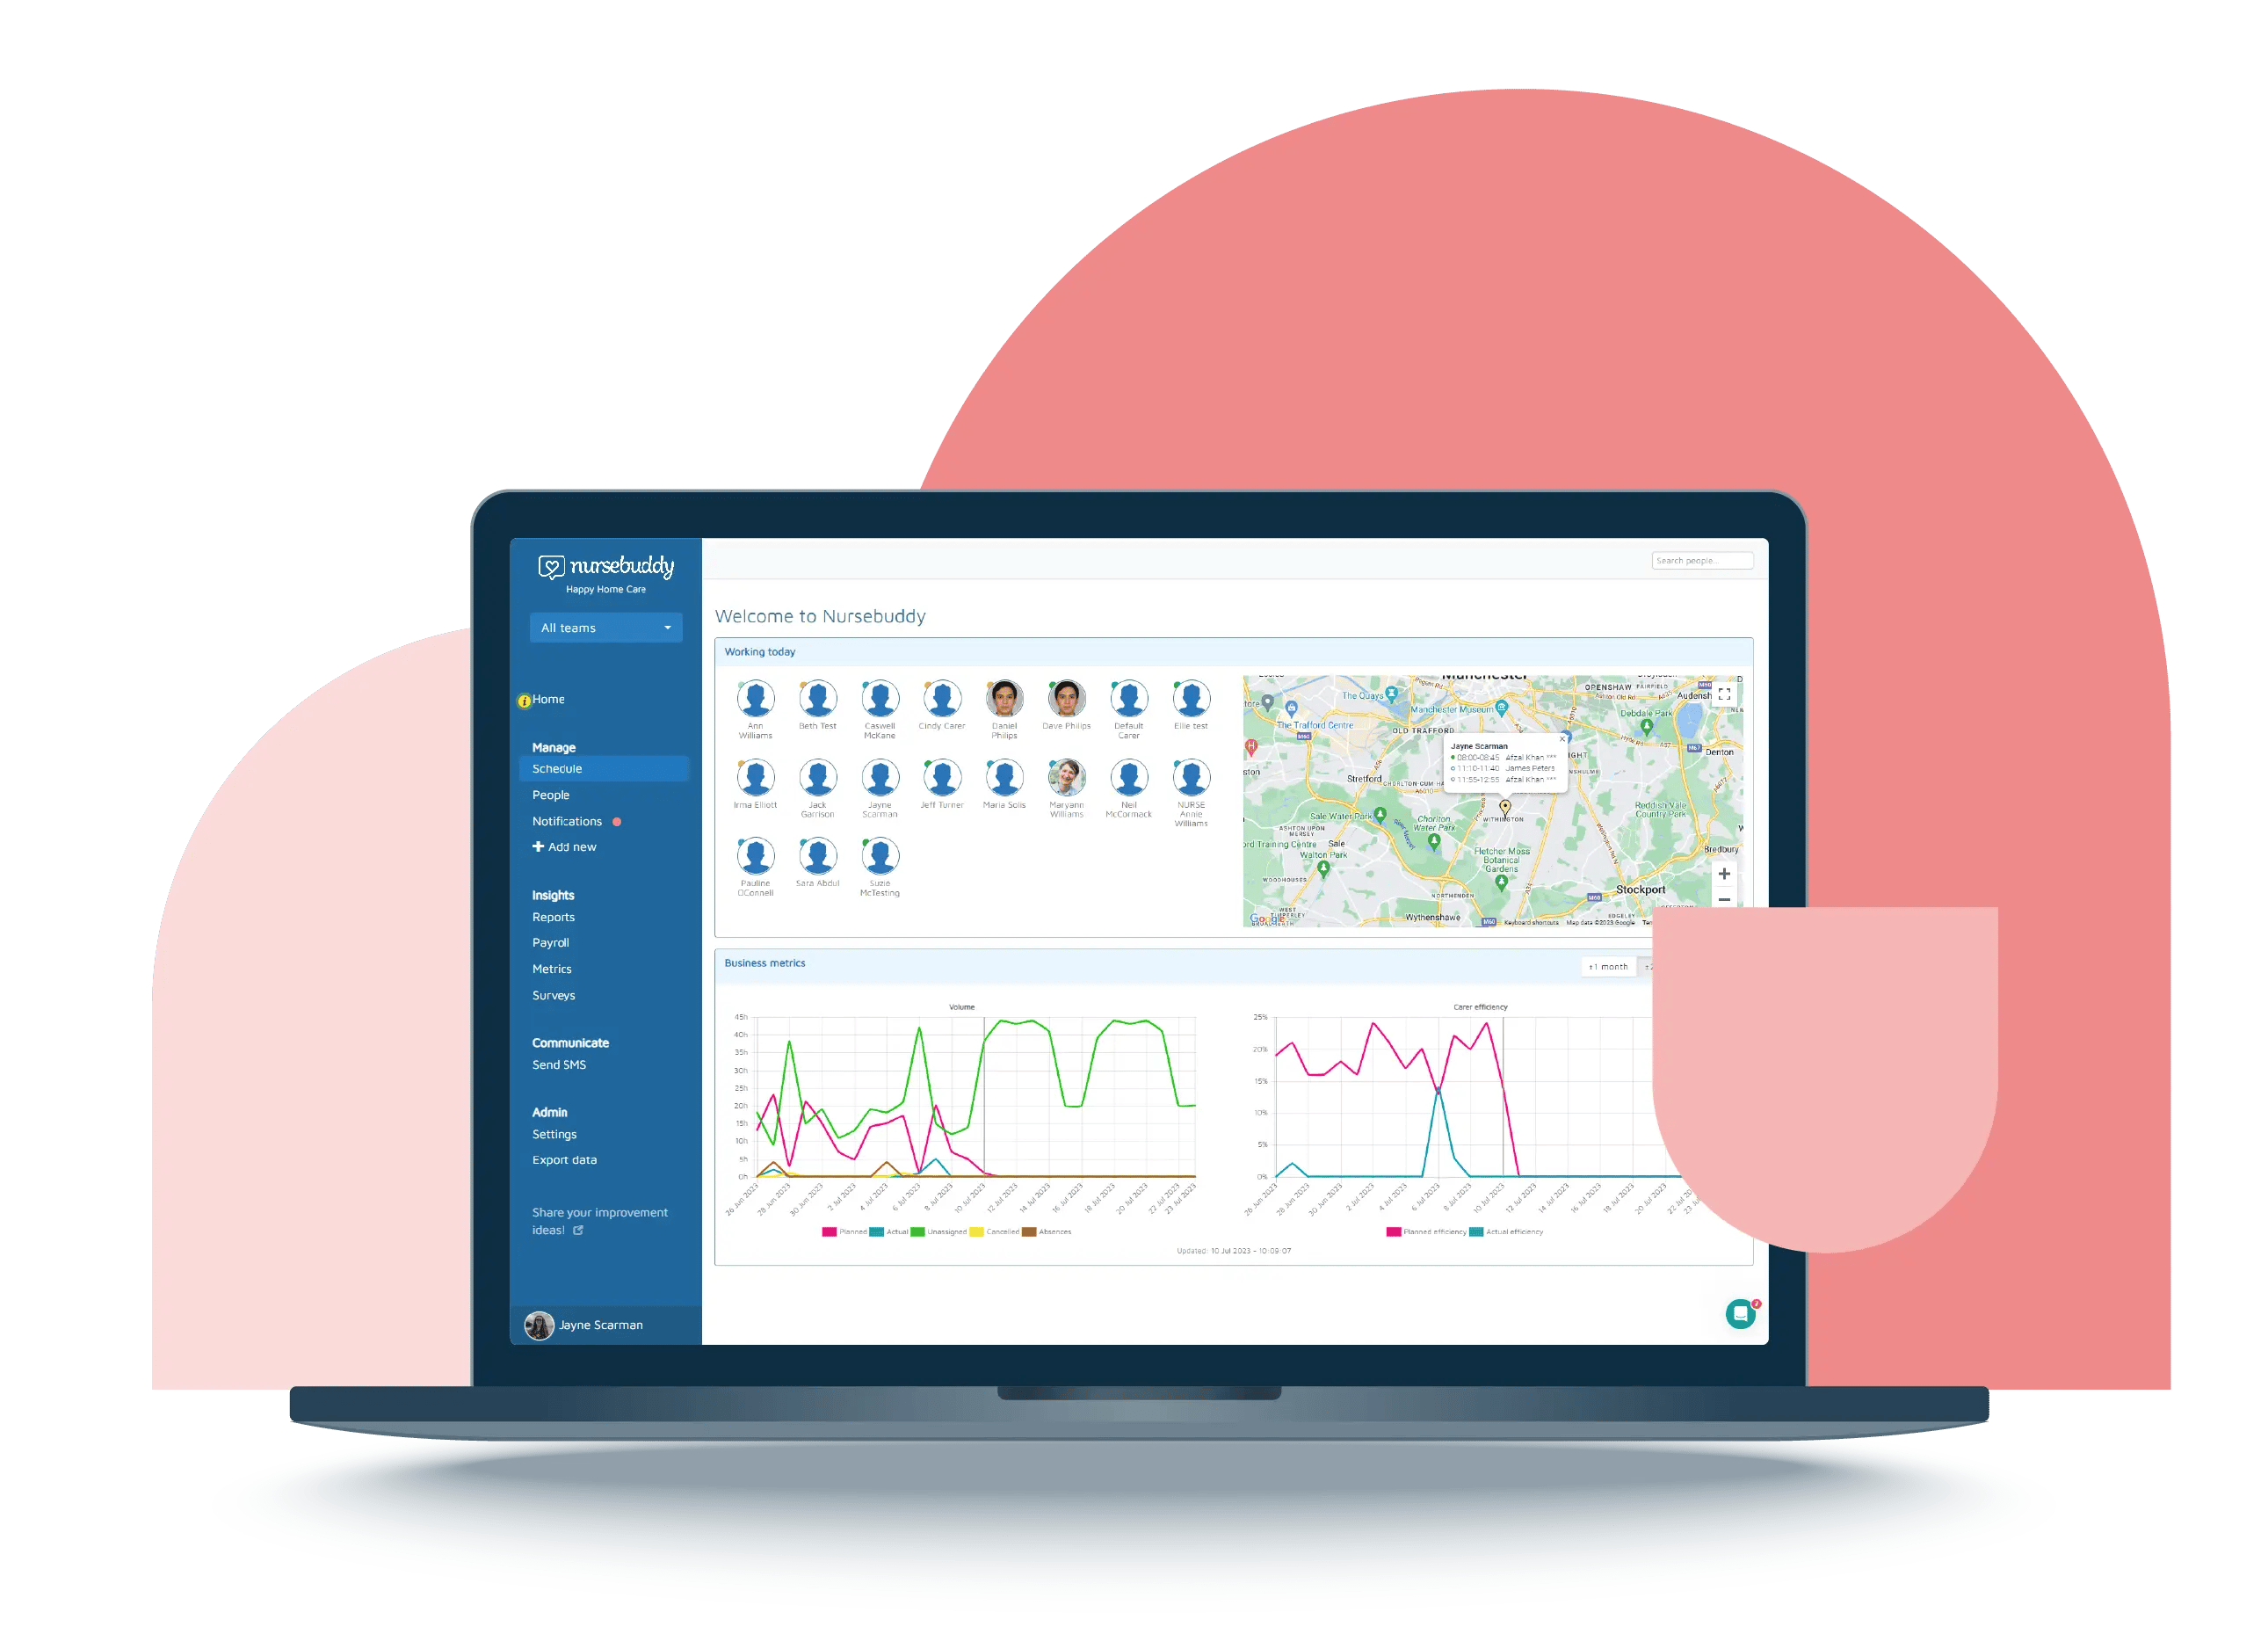 Nursebuddy's home screen showing key metrics and visualisations